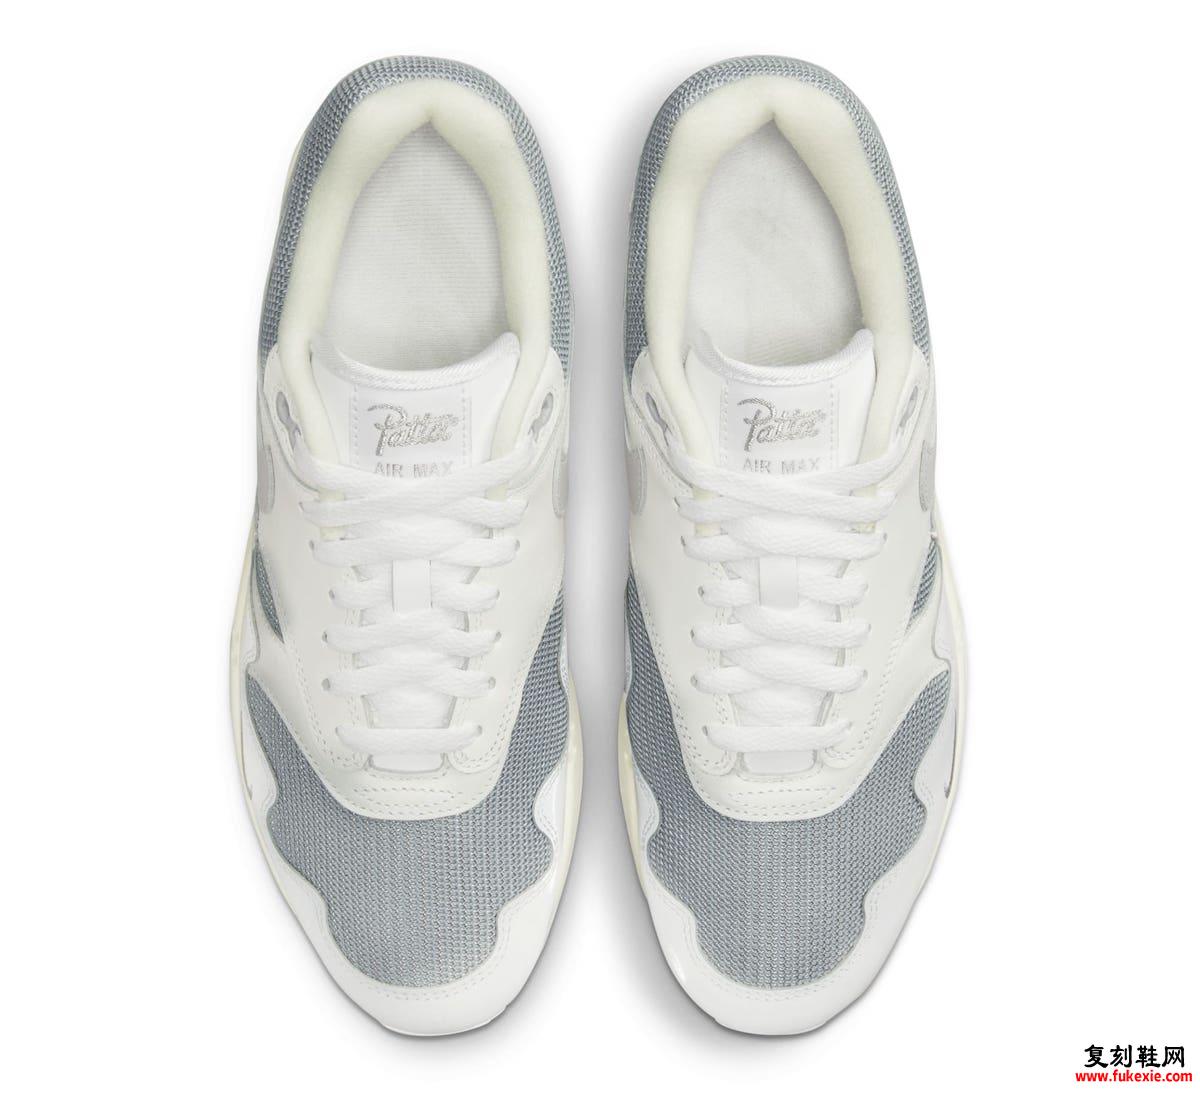 Patta Nike Air Max 1 白色灰色 DQ0299-100 发布日期